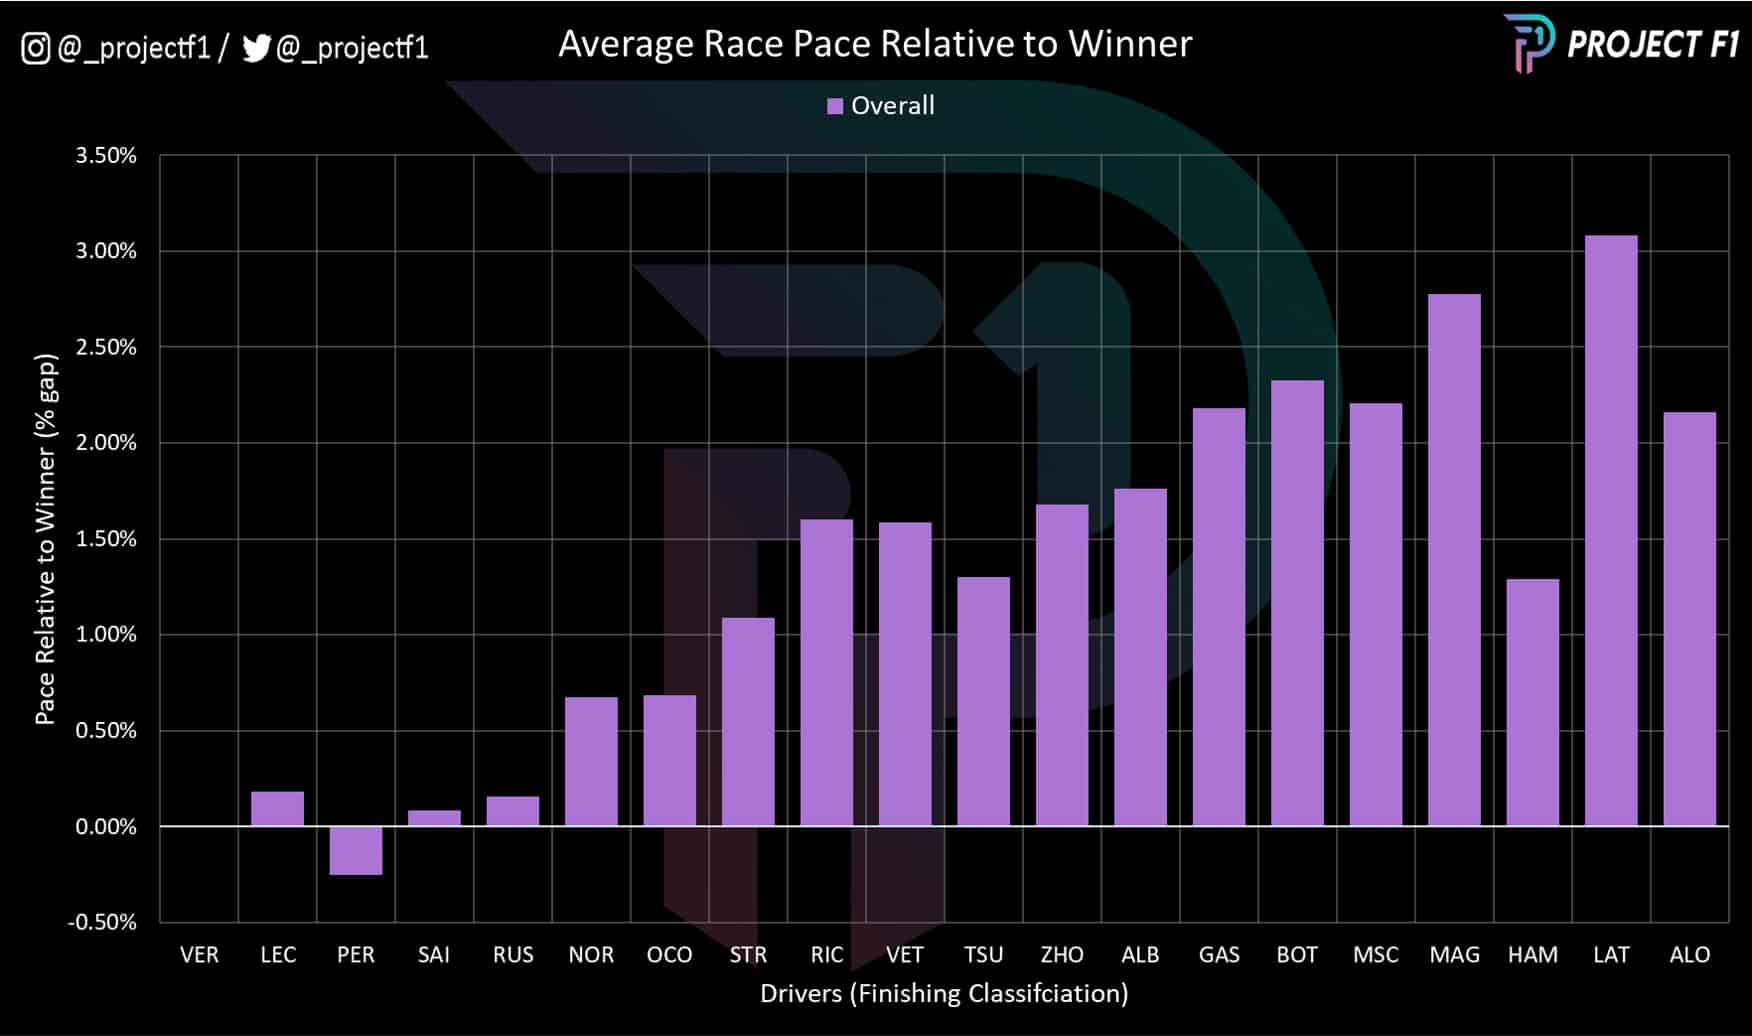 Abu Dhabi GP 22 average race pace